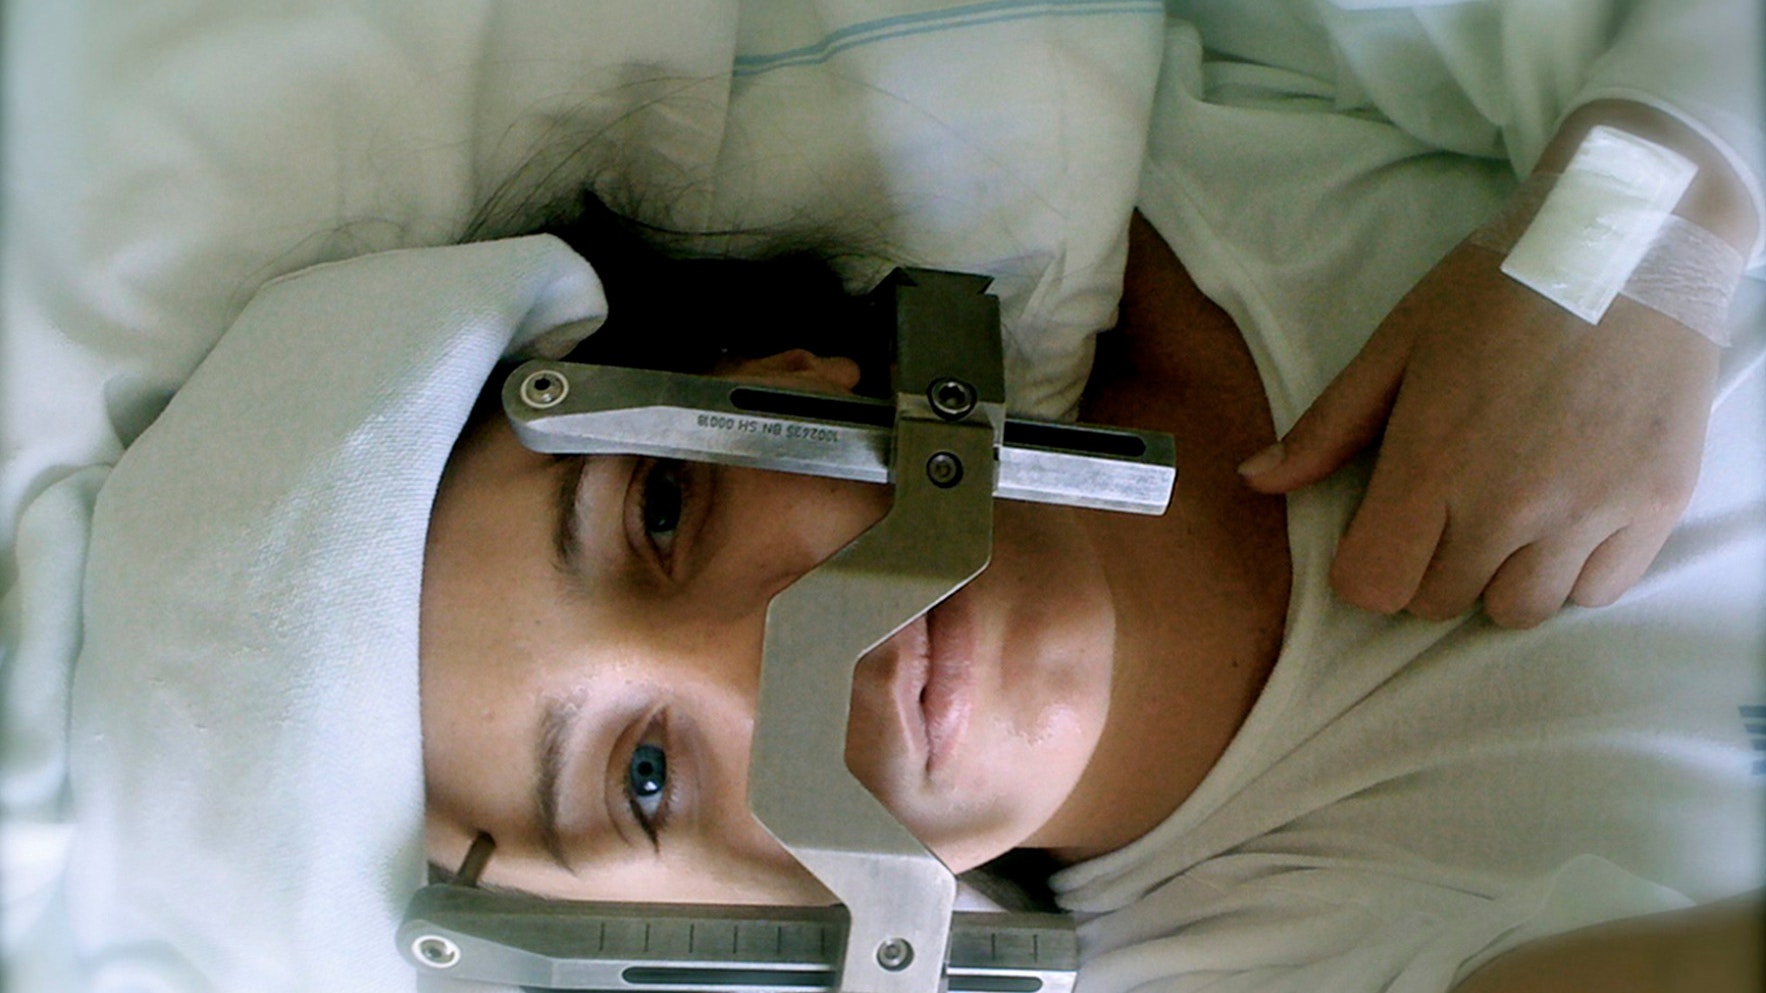 Petra fik skruet et stålstativ fast på kraniet for at holde det helt stille, mens hun blev behandlet med stråling.